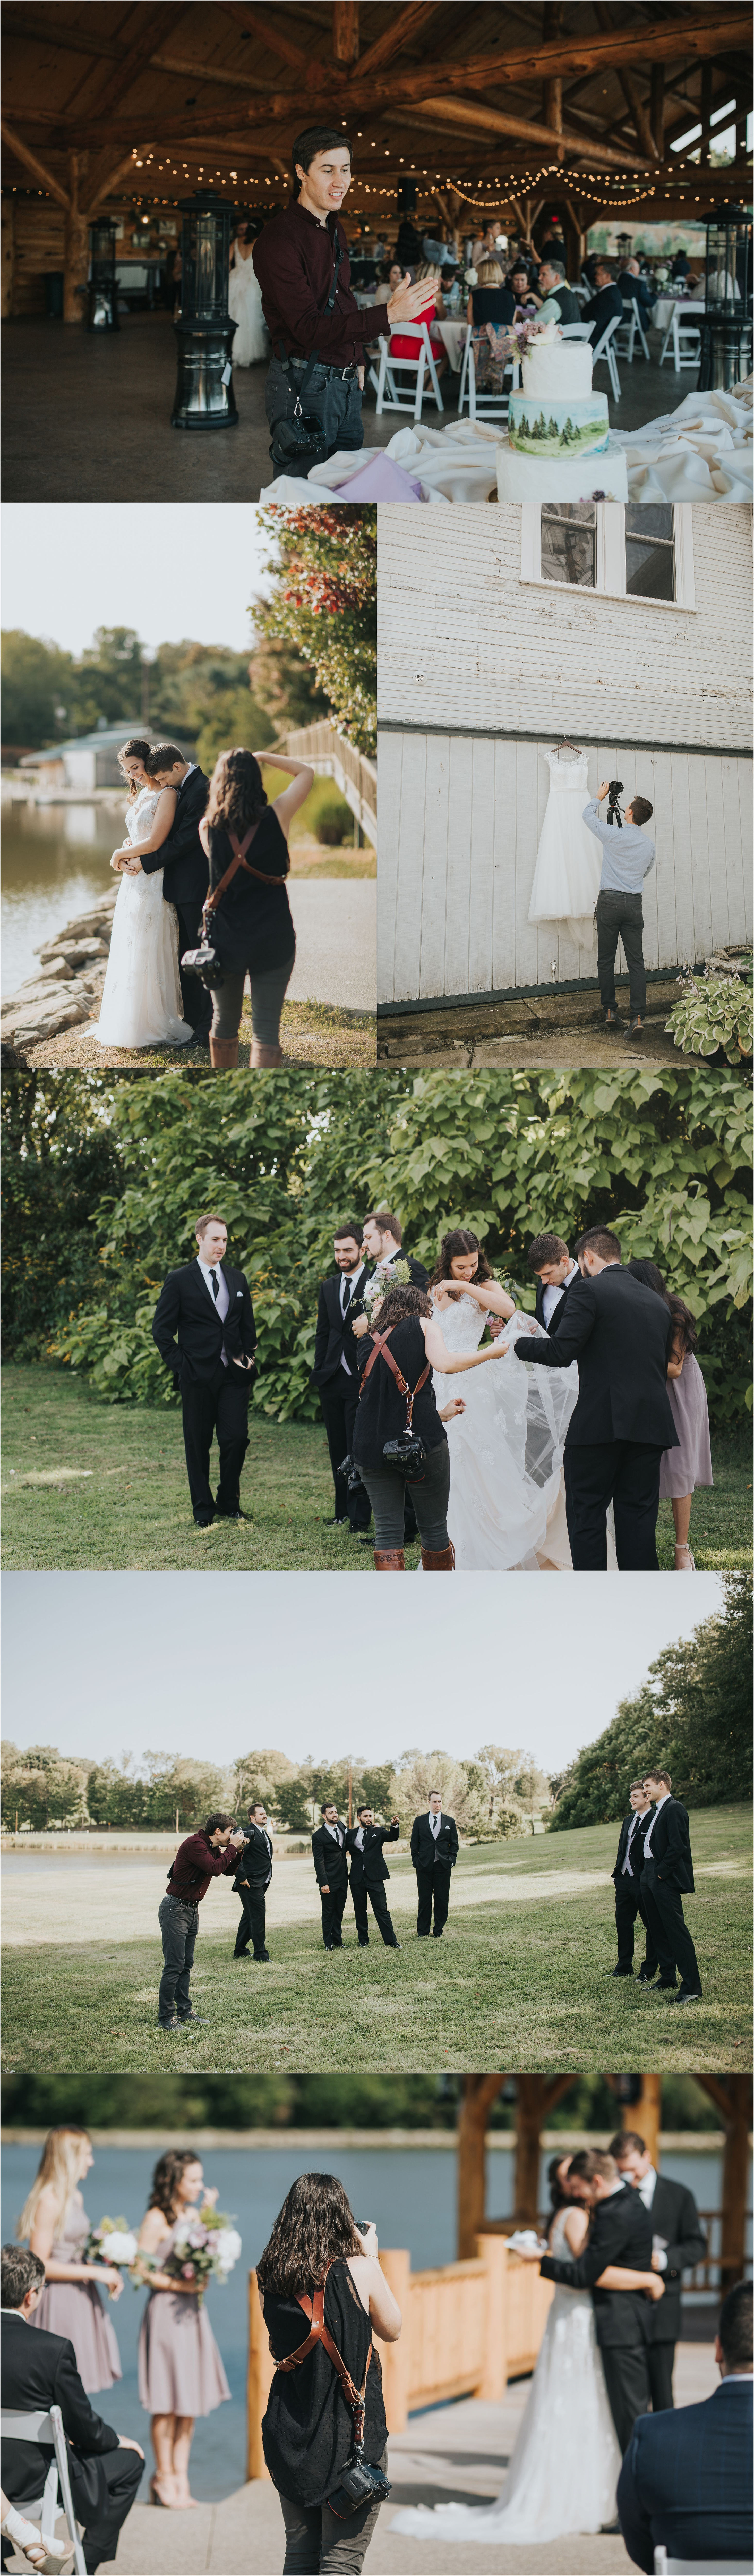 02 - pittsburgh wedding videographer.jpg